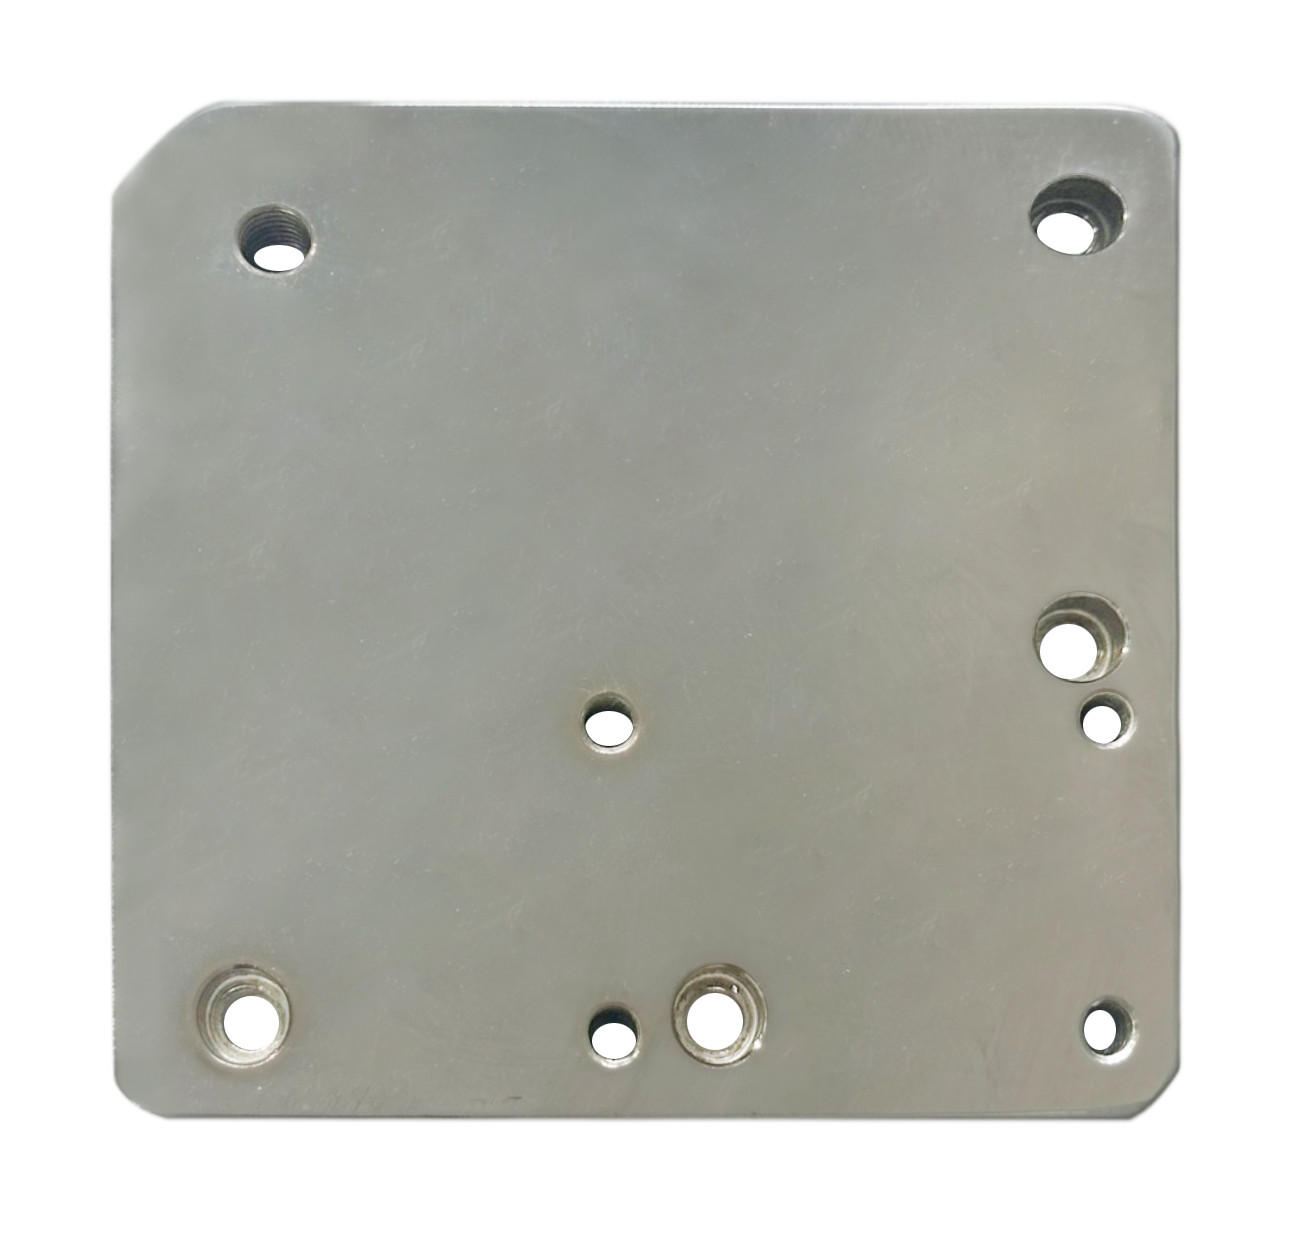 Mounting plate for frame, caster & adjuster pad